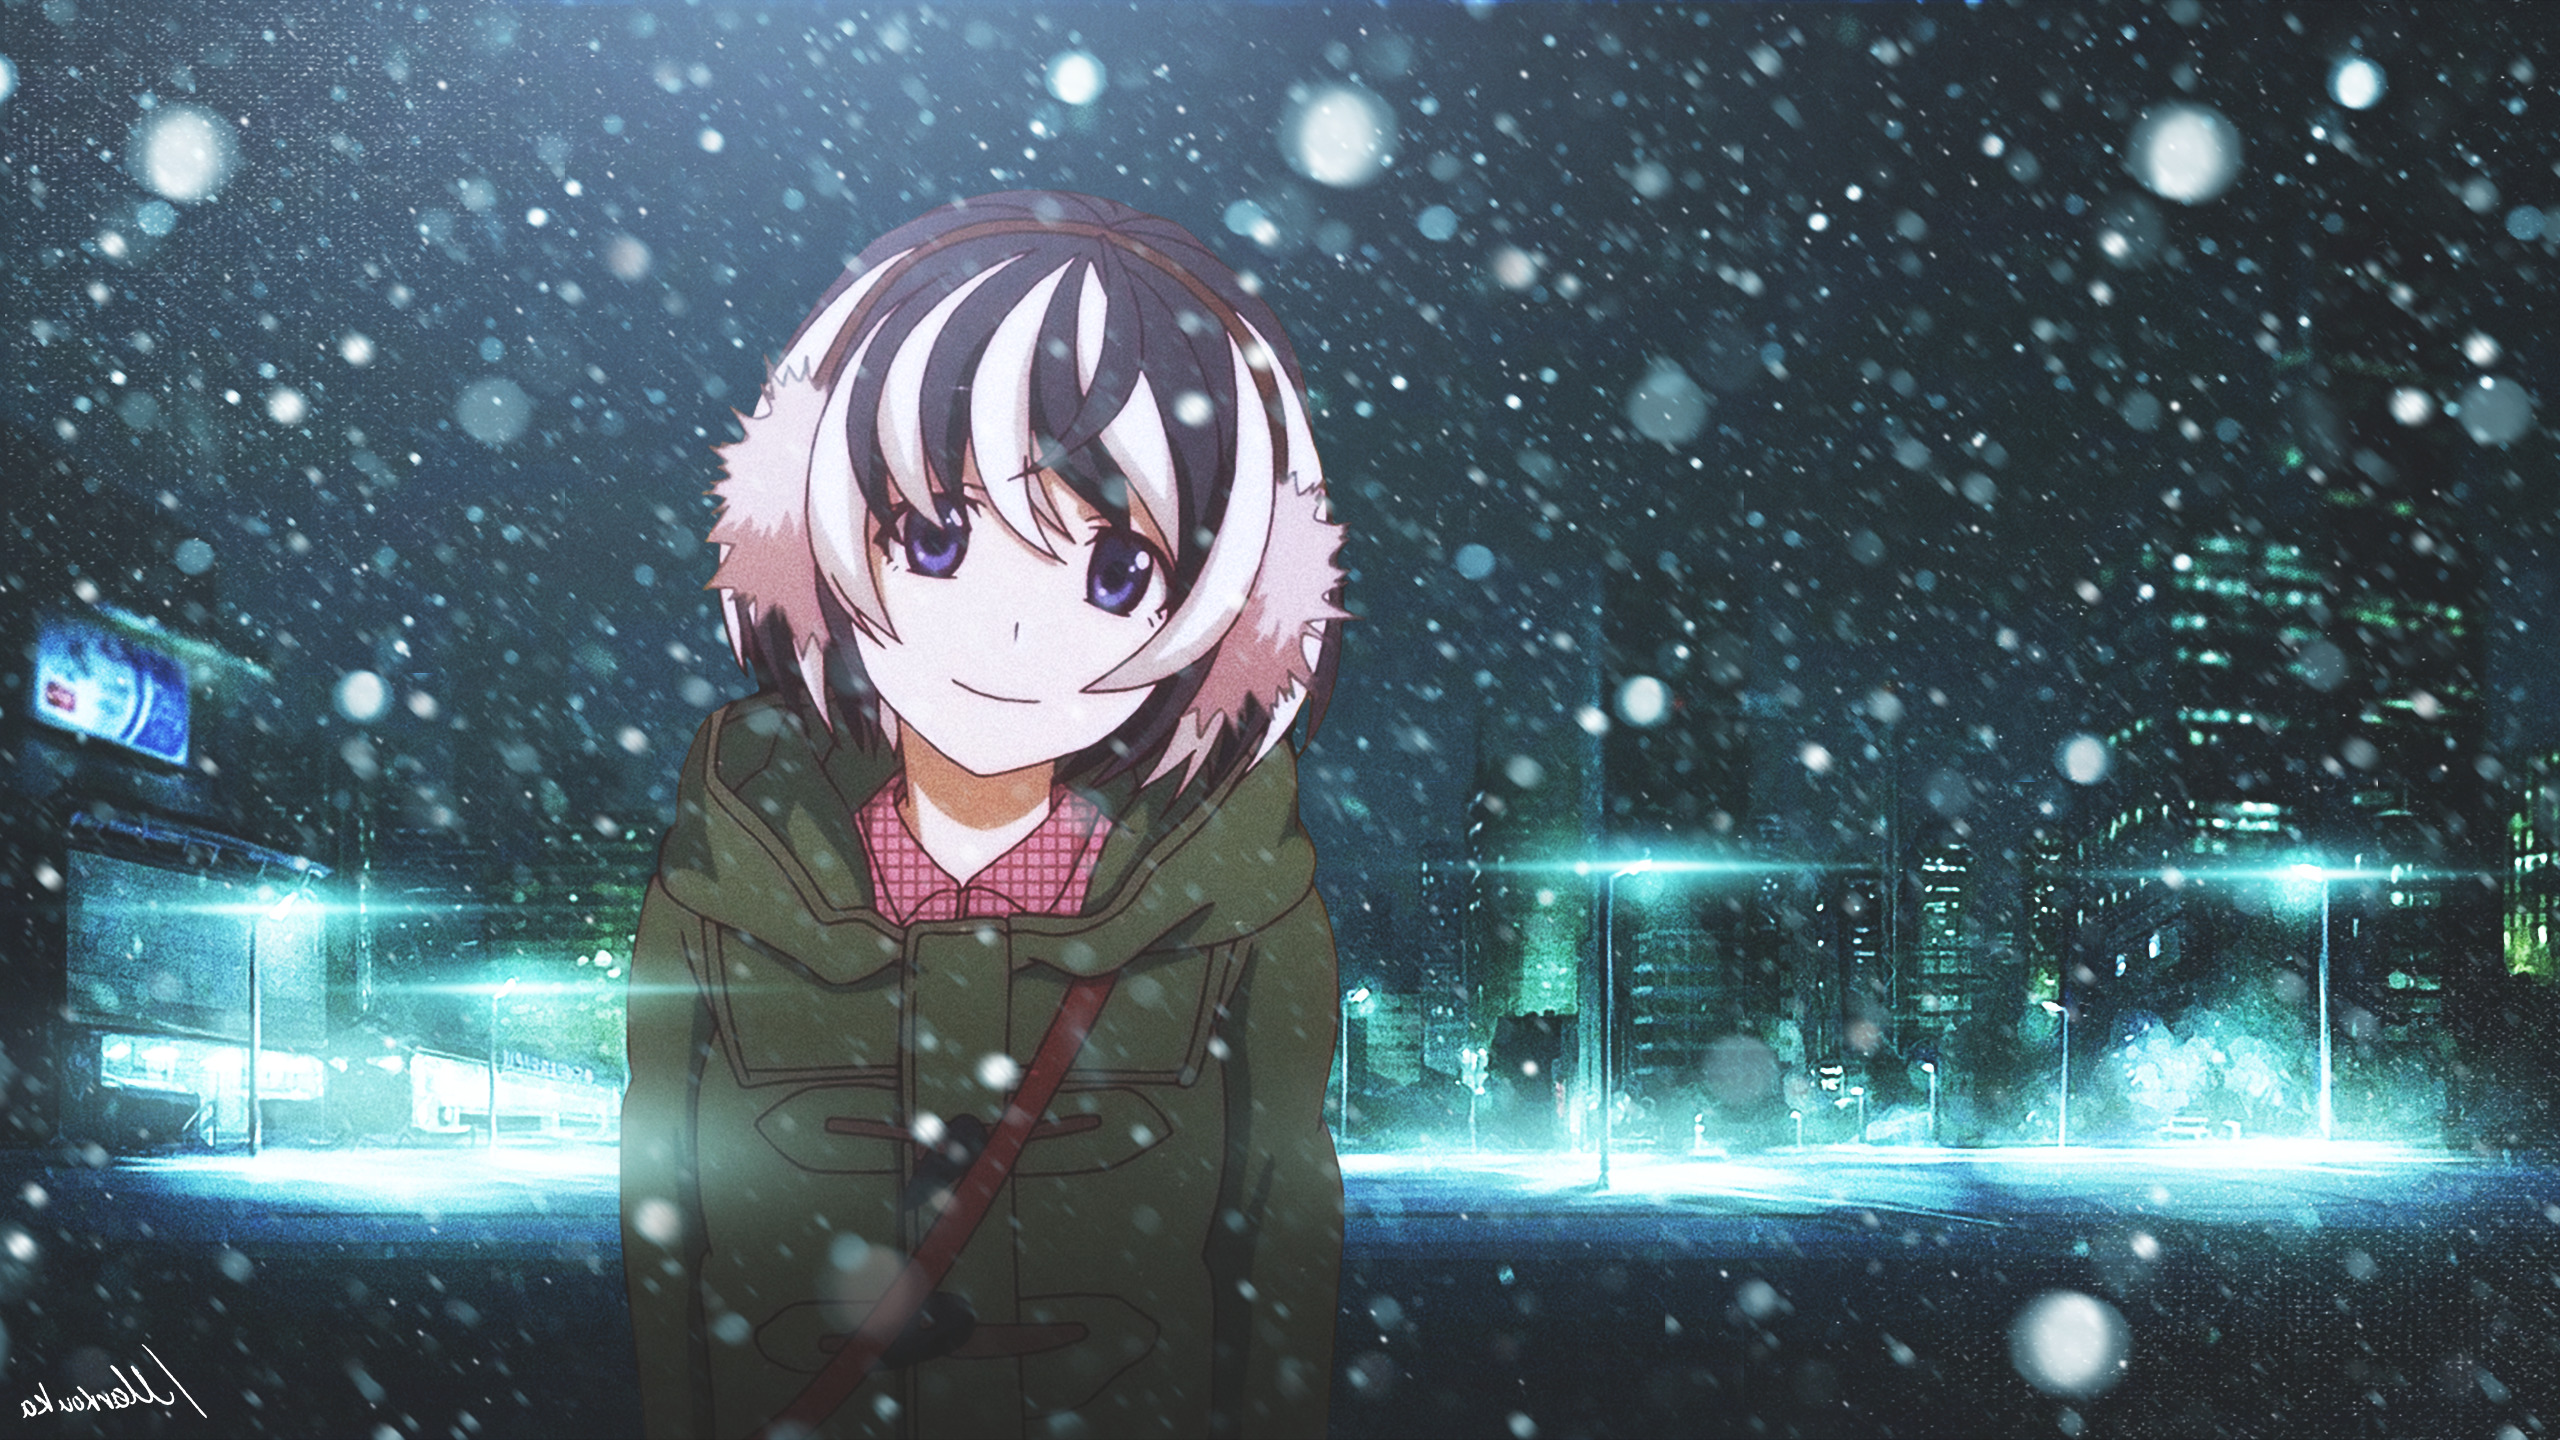 Monogatari Series, Hanekawa Tsubasa, Winter, Night, City, Snow, Anime Wallpaper